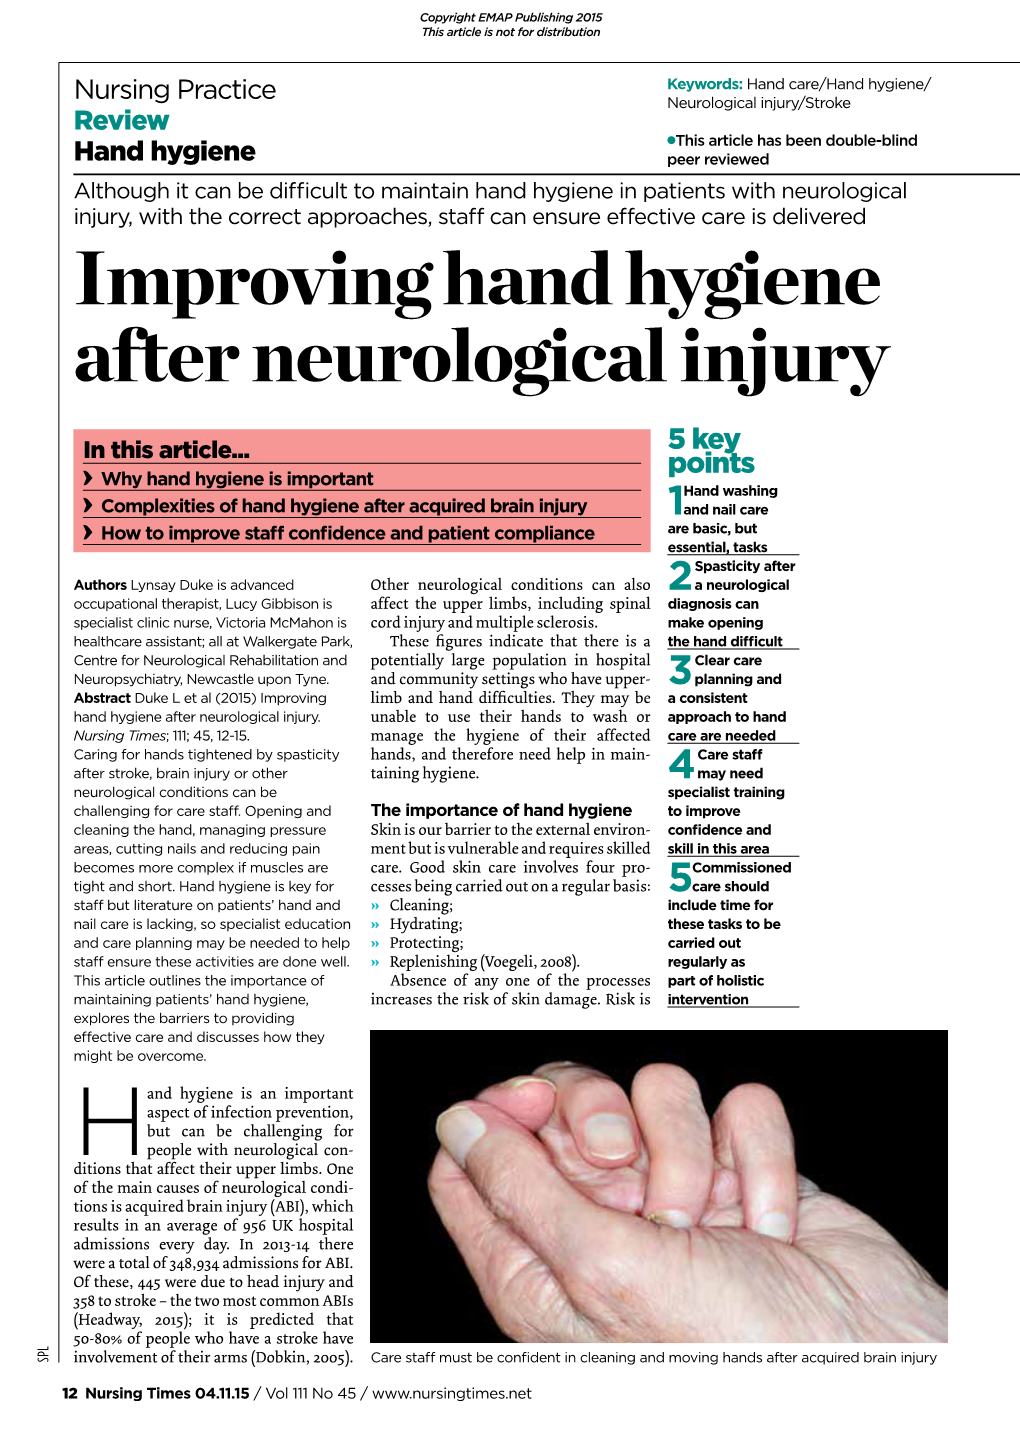 Improving Hand Hygiene After Neurological Injury